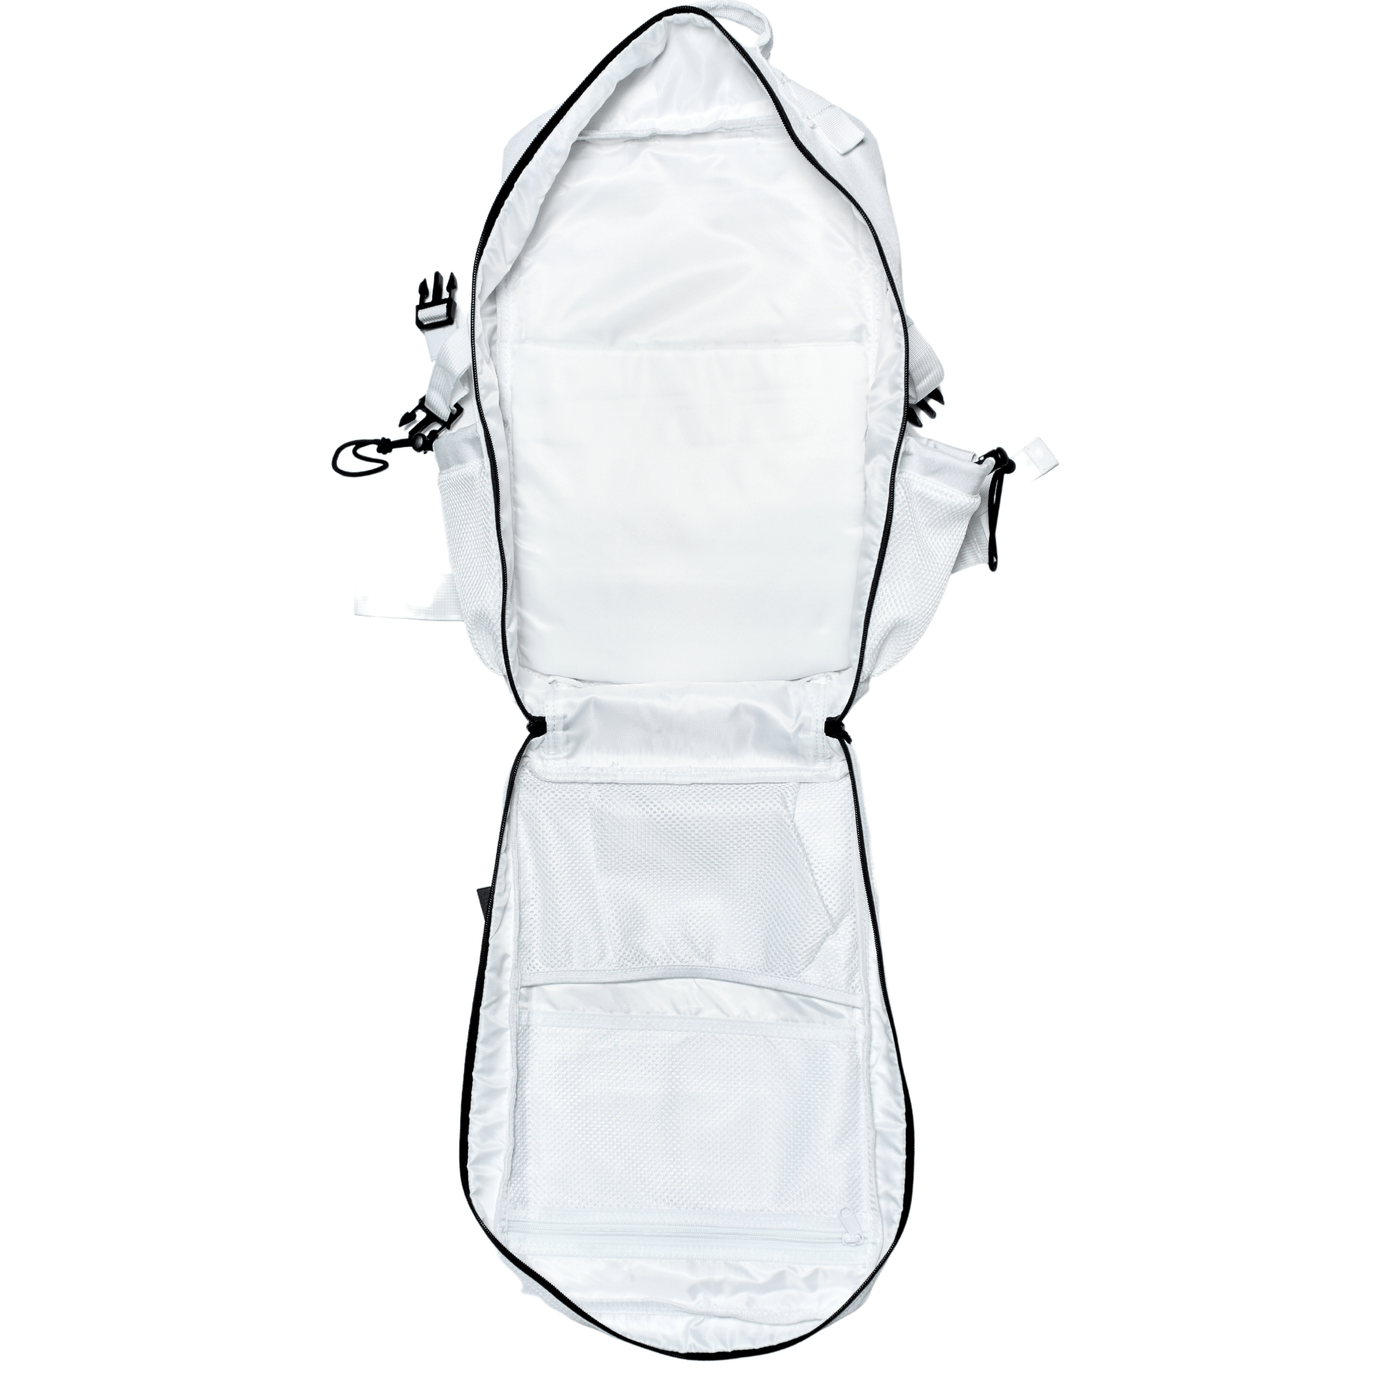 Gen 3 White 45L Backpack